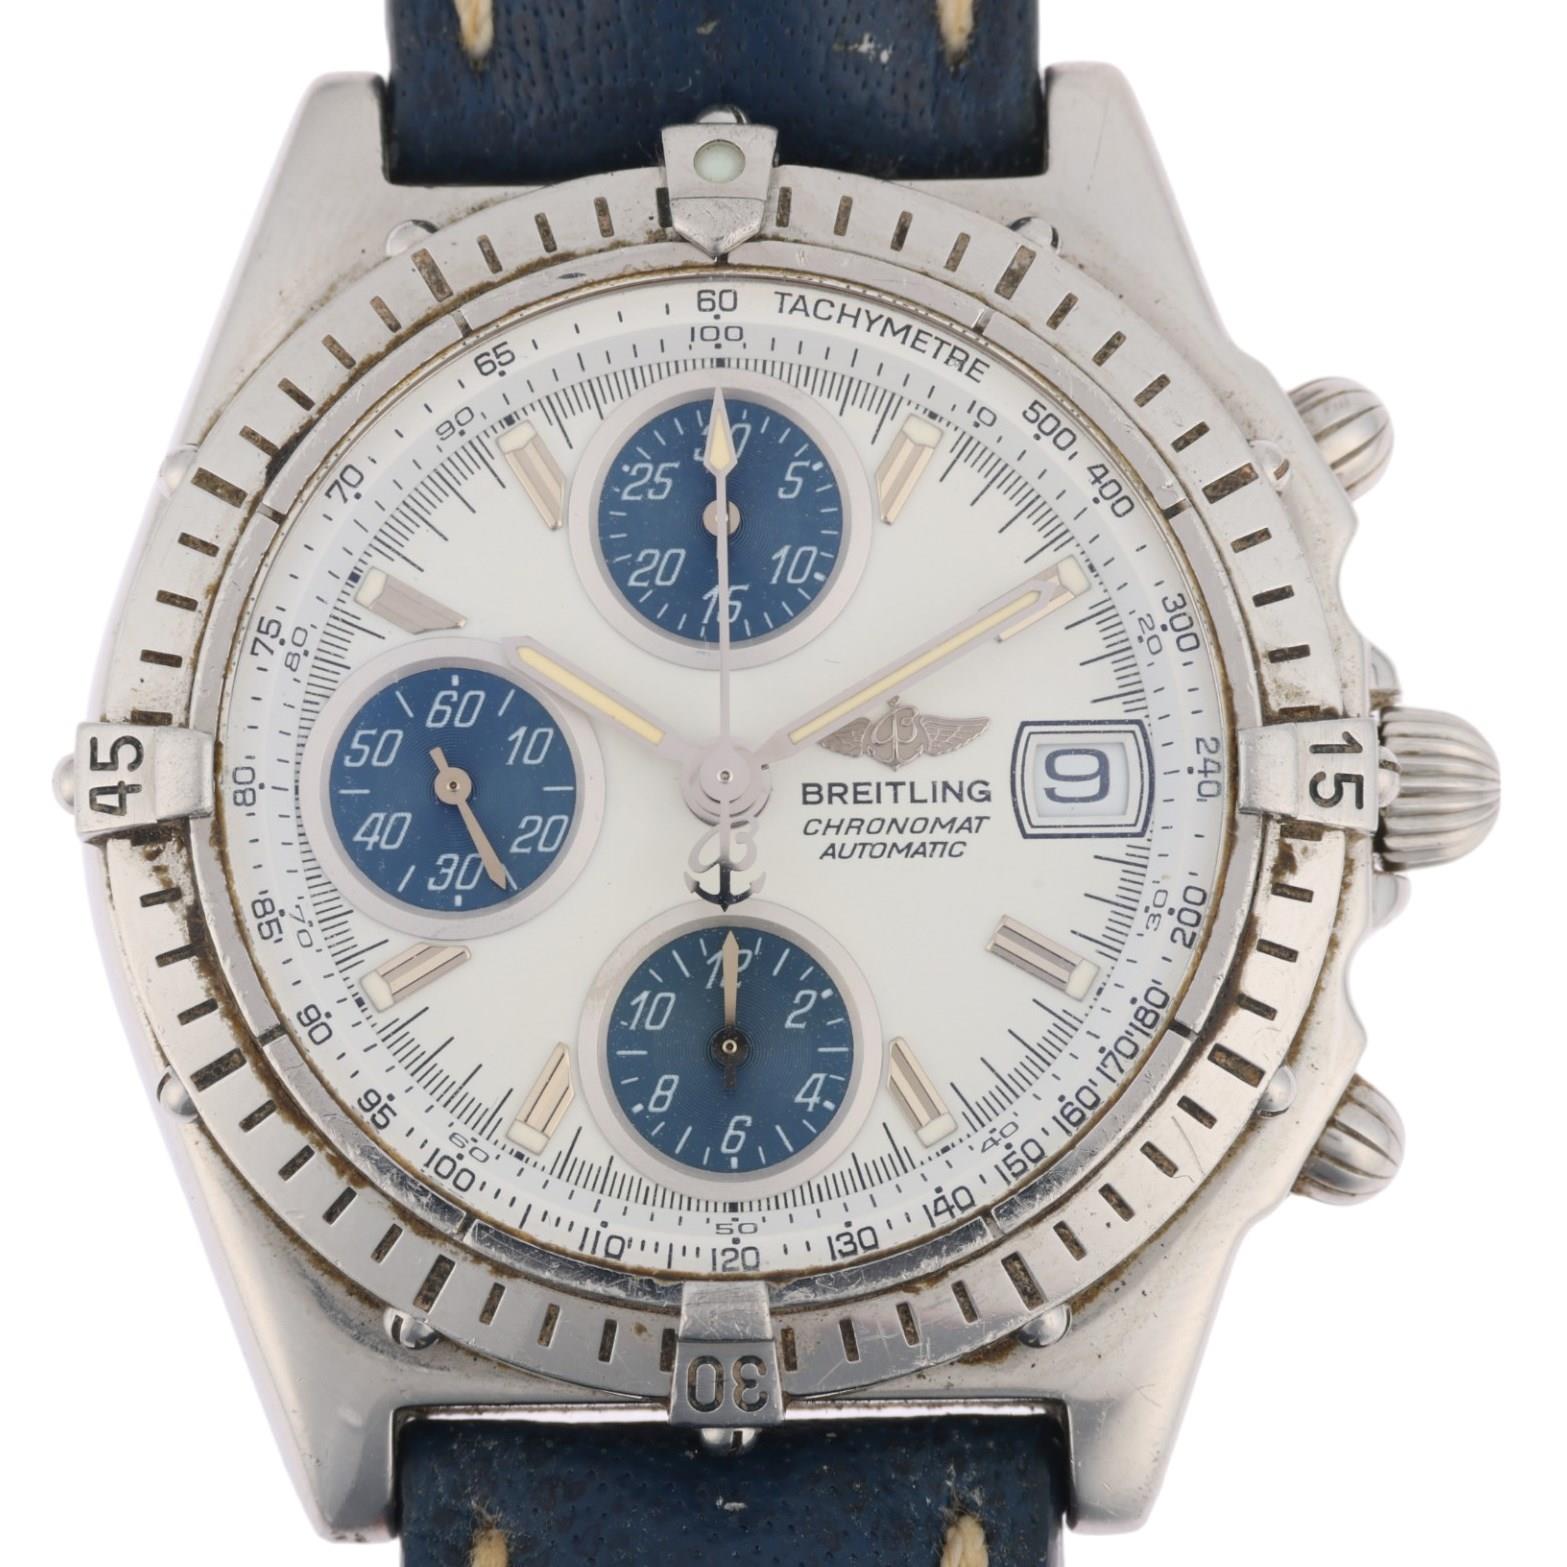 BREITLING - a stainless steel Chronomat automatic chronograph calendar bracelet watch, ref. A13050.